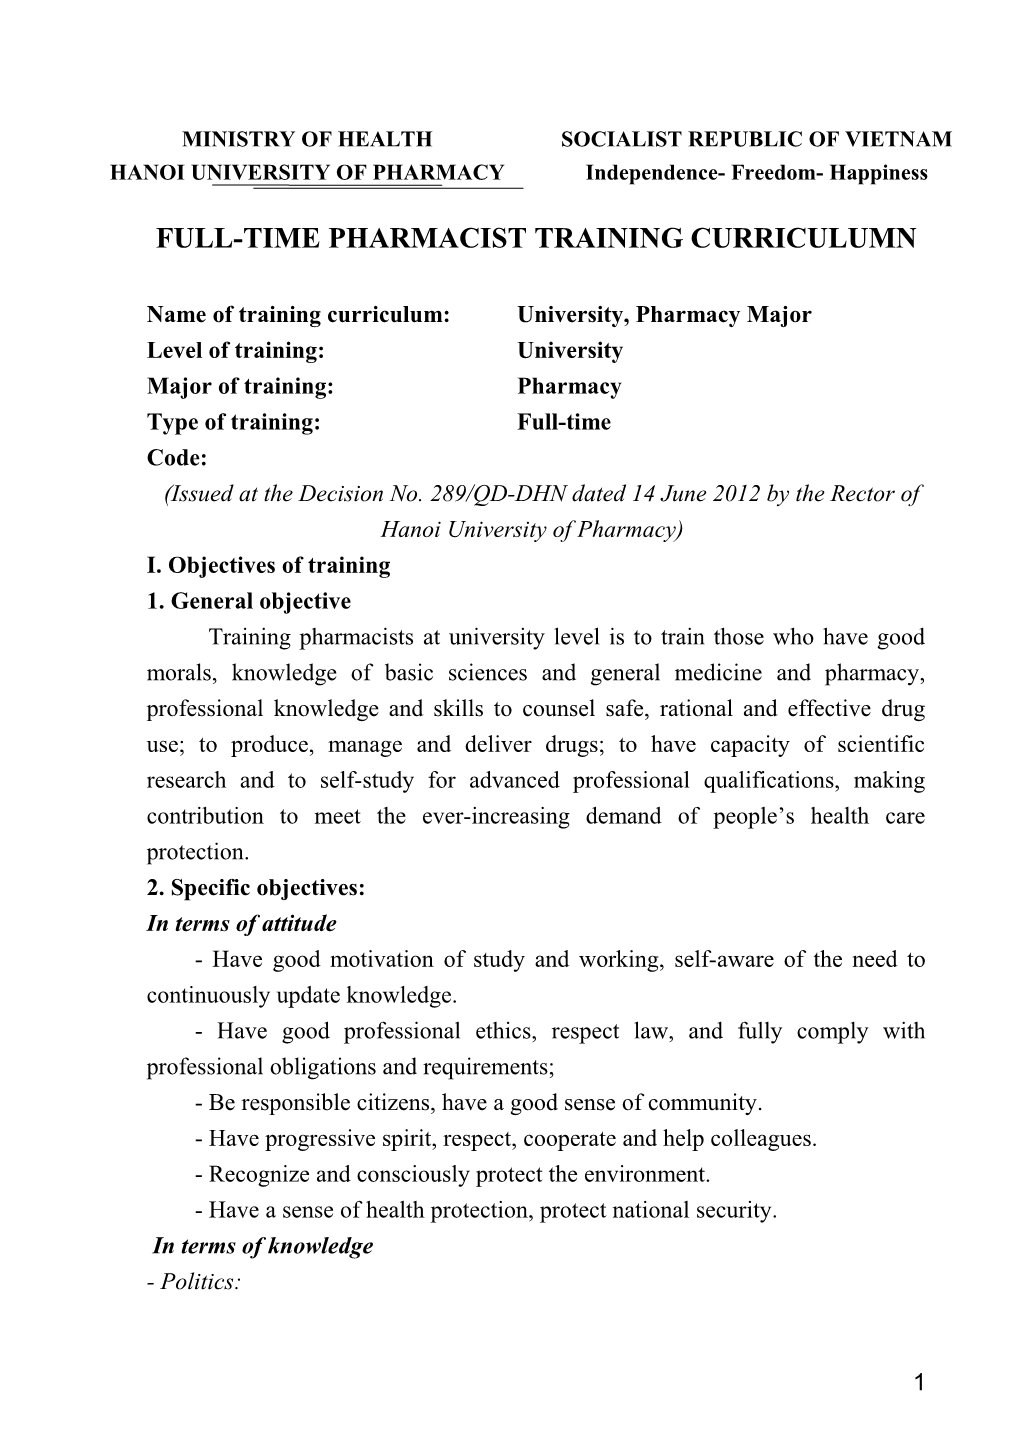 Full-Time Pharmacist Training Curriculumn